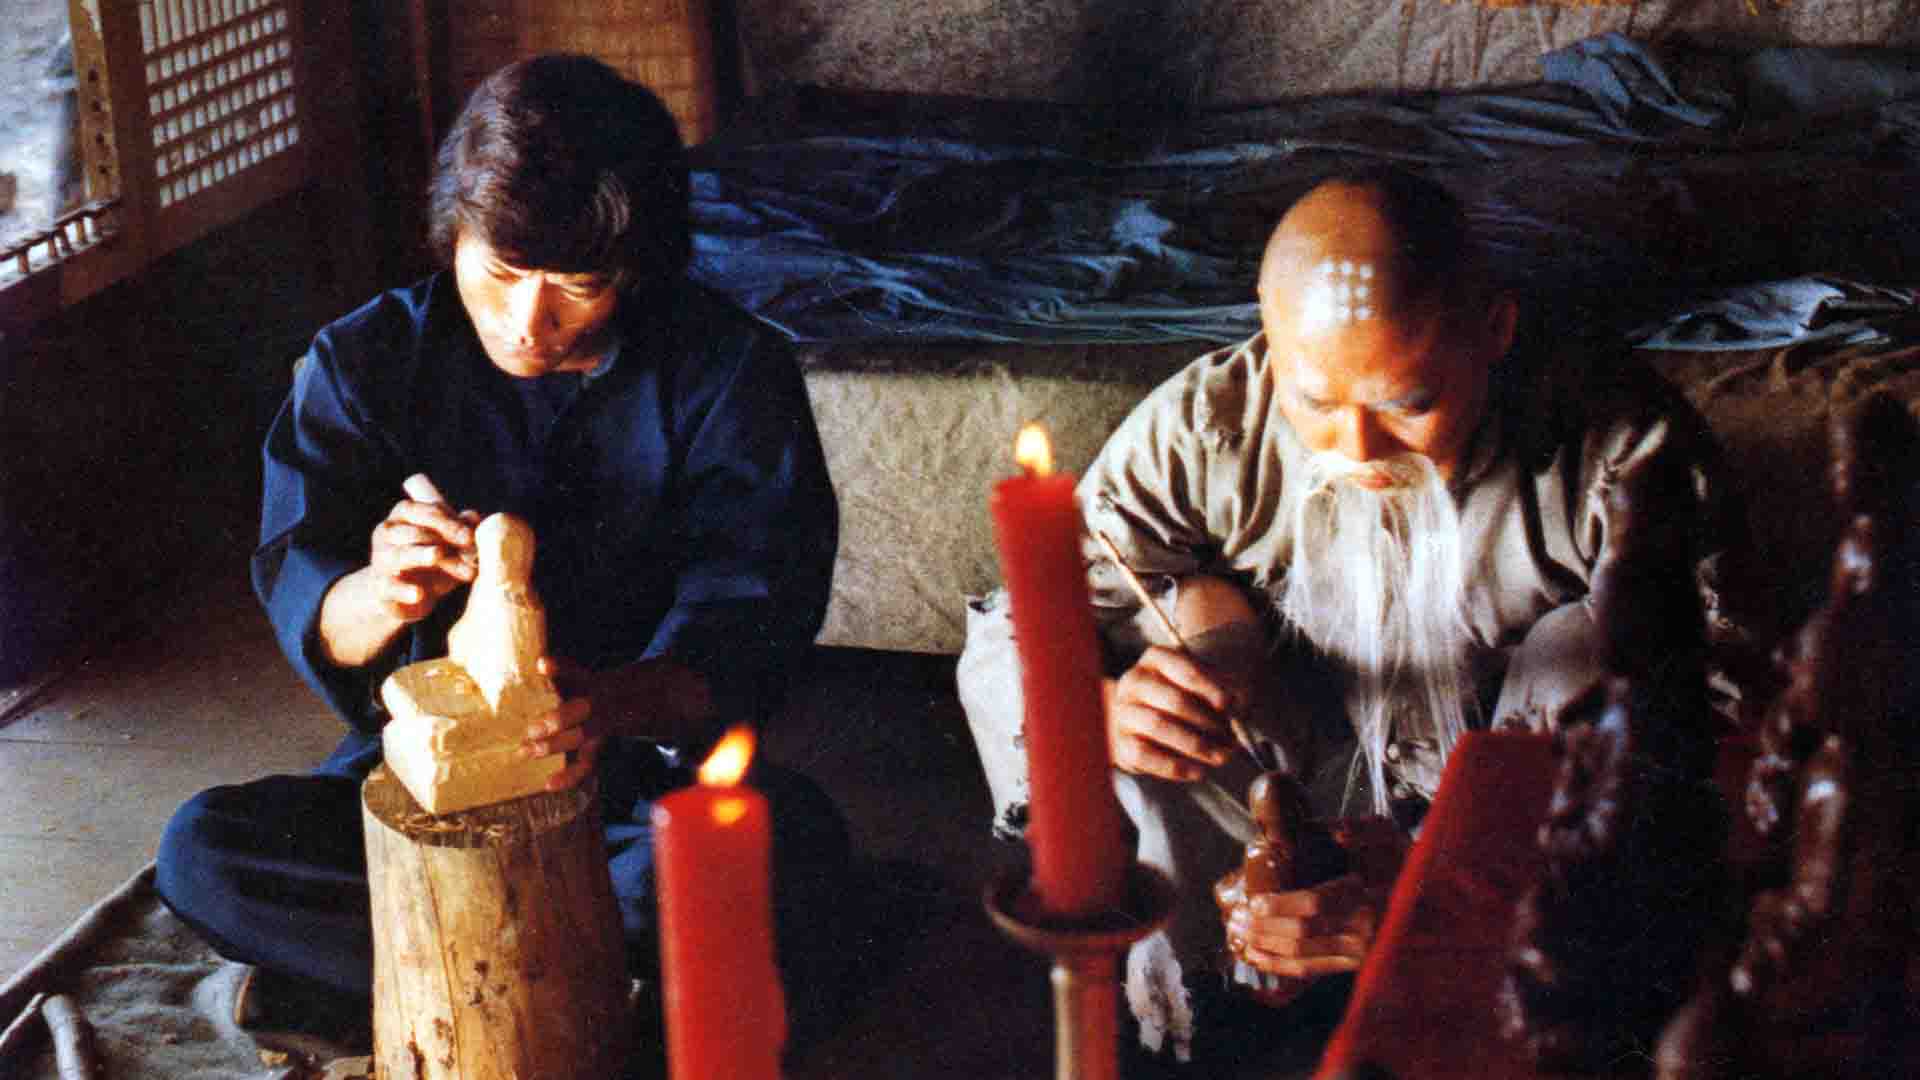 Les 5 foudroyants de Shaolin 1983 drive in movie channel